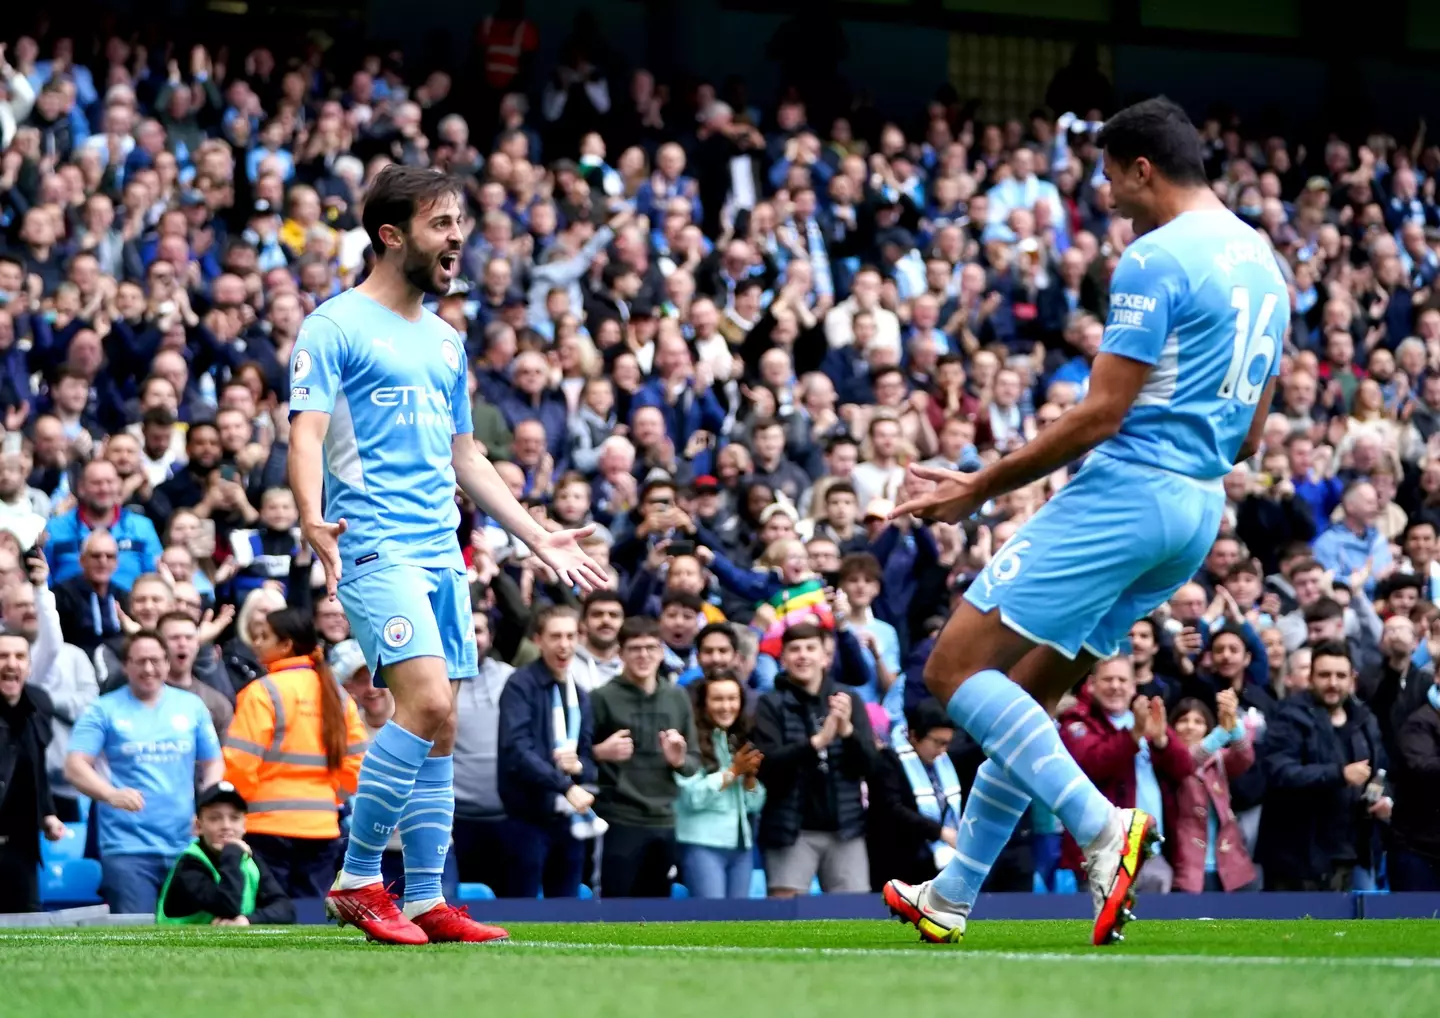 Bernardo Silva and Rodri celebrate after City take the lead against Burnley (Image: PA / Alamy)